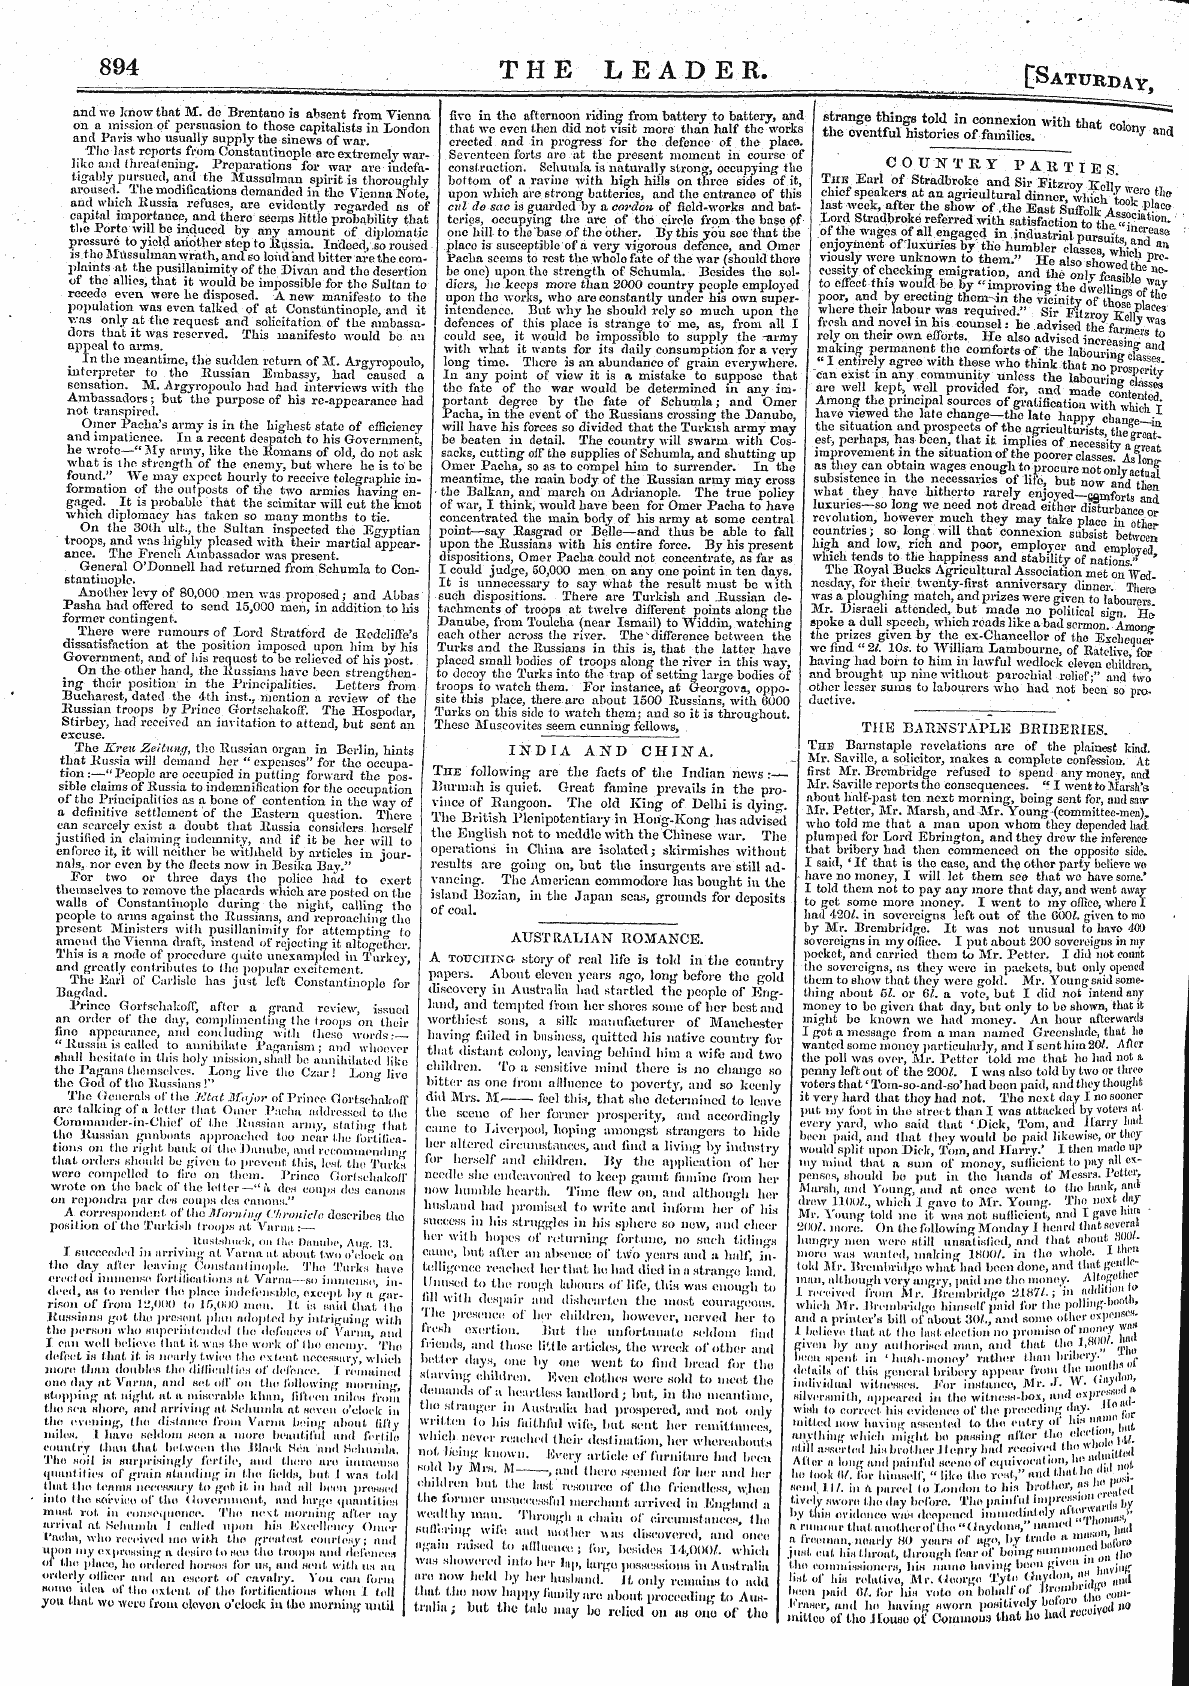 Leader (1850-1860): jS F Y, Country edition - The Baknstaple Briberies. The Barnstaple...